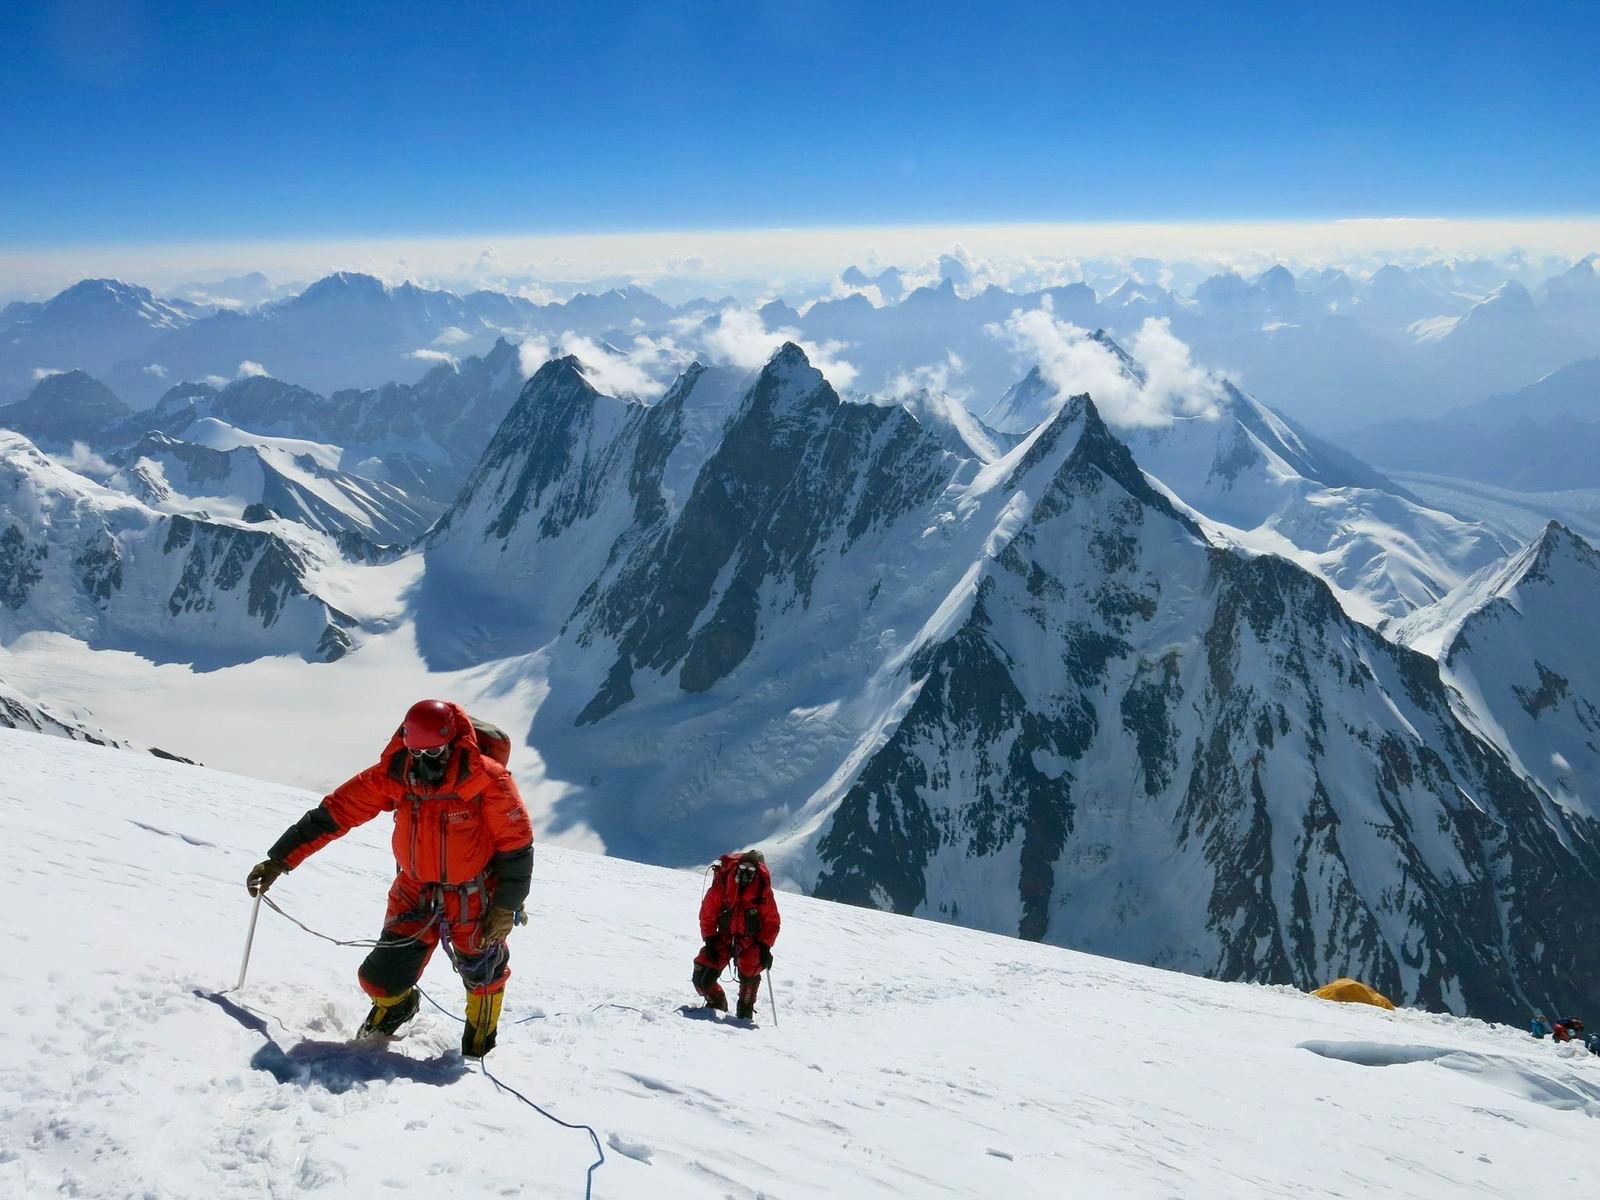 K2 no longer a killer mountain? - My, Tourism, Mountaineering, The mountains, Climbing, Mountain tourism, Karakoram, Record, K2, Longpost